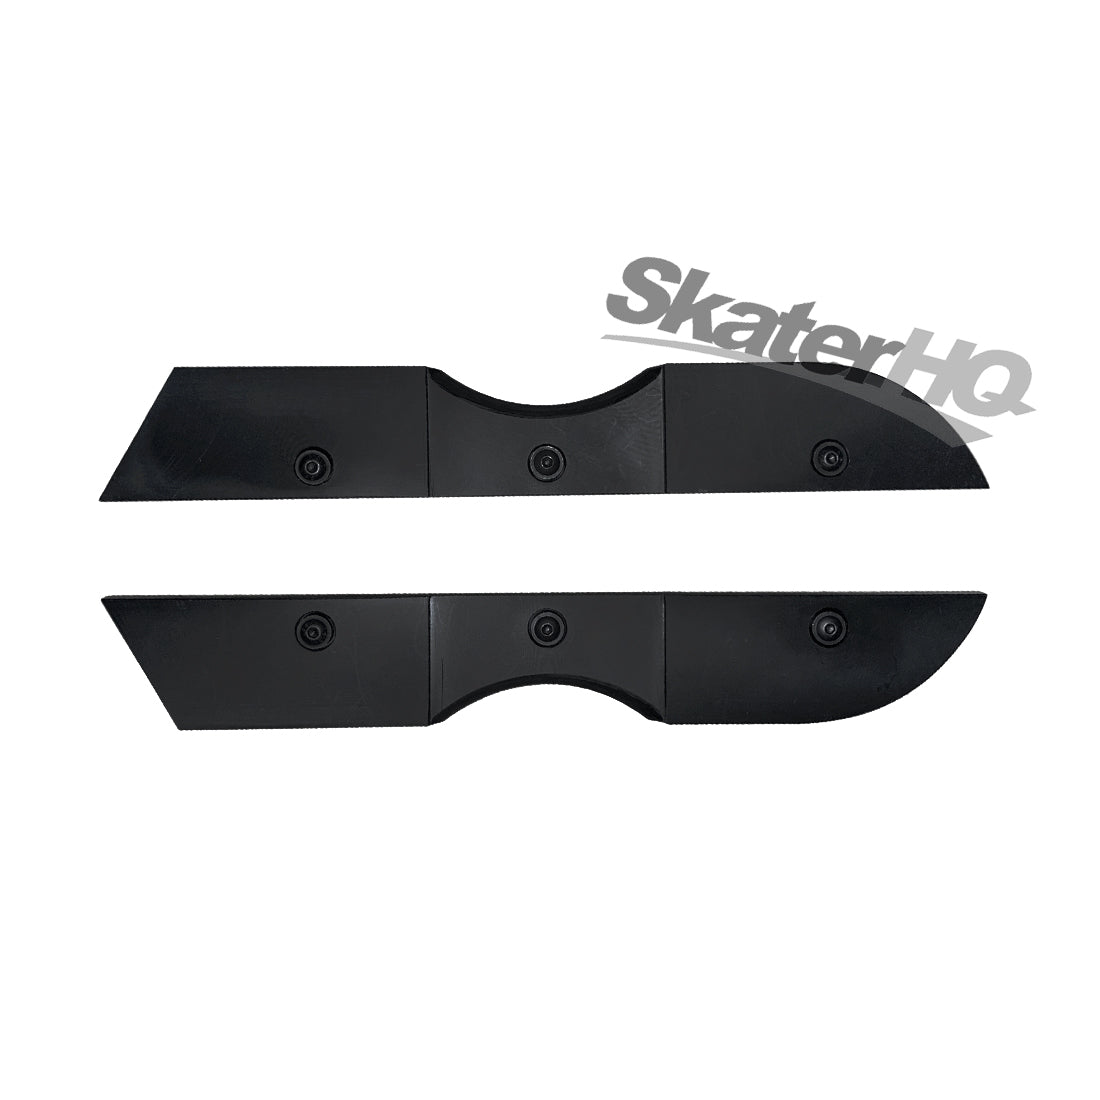 Sliqx Aeon Soul Plate Sliders - EU41-42 - Black Inline Hardware and Parts